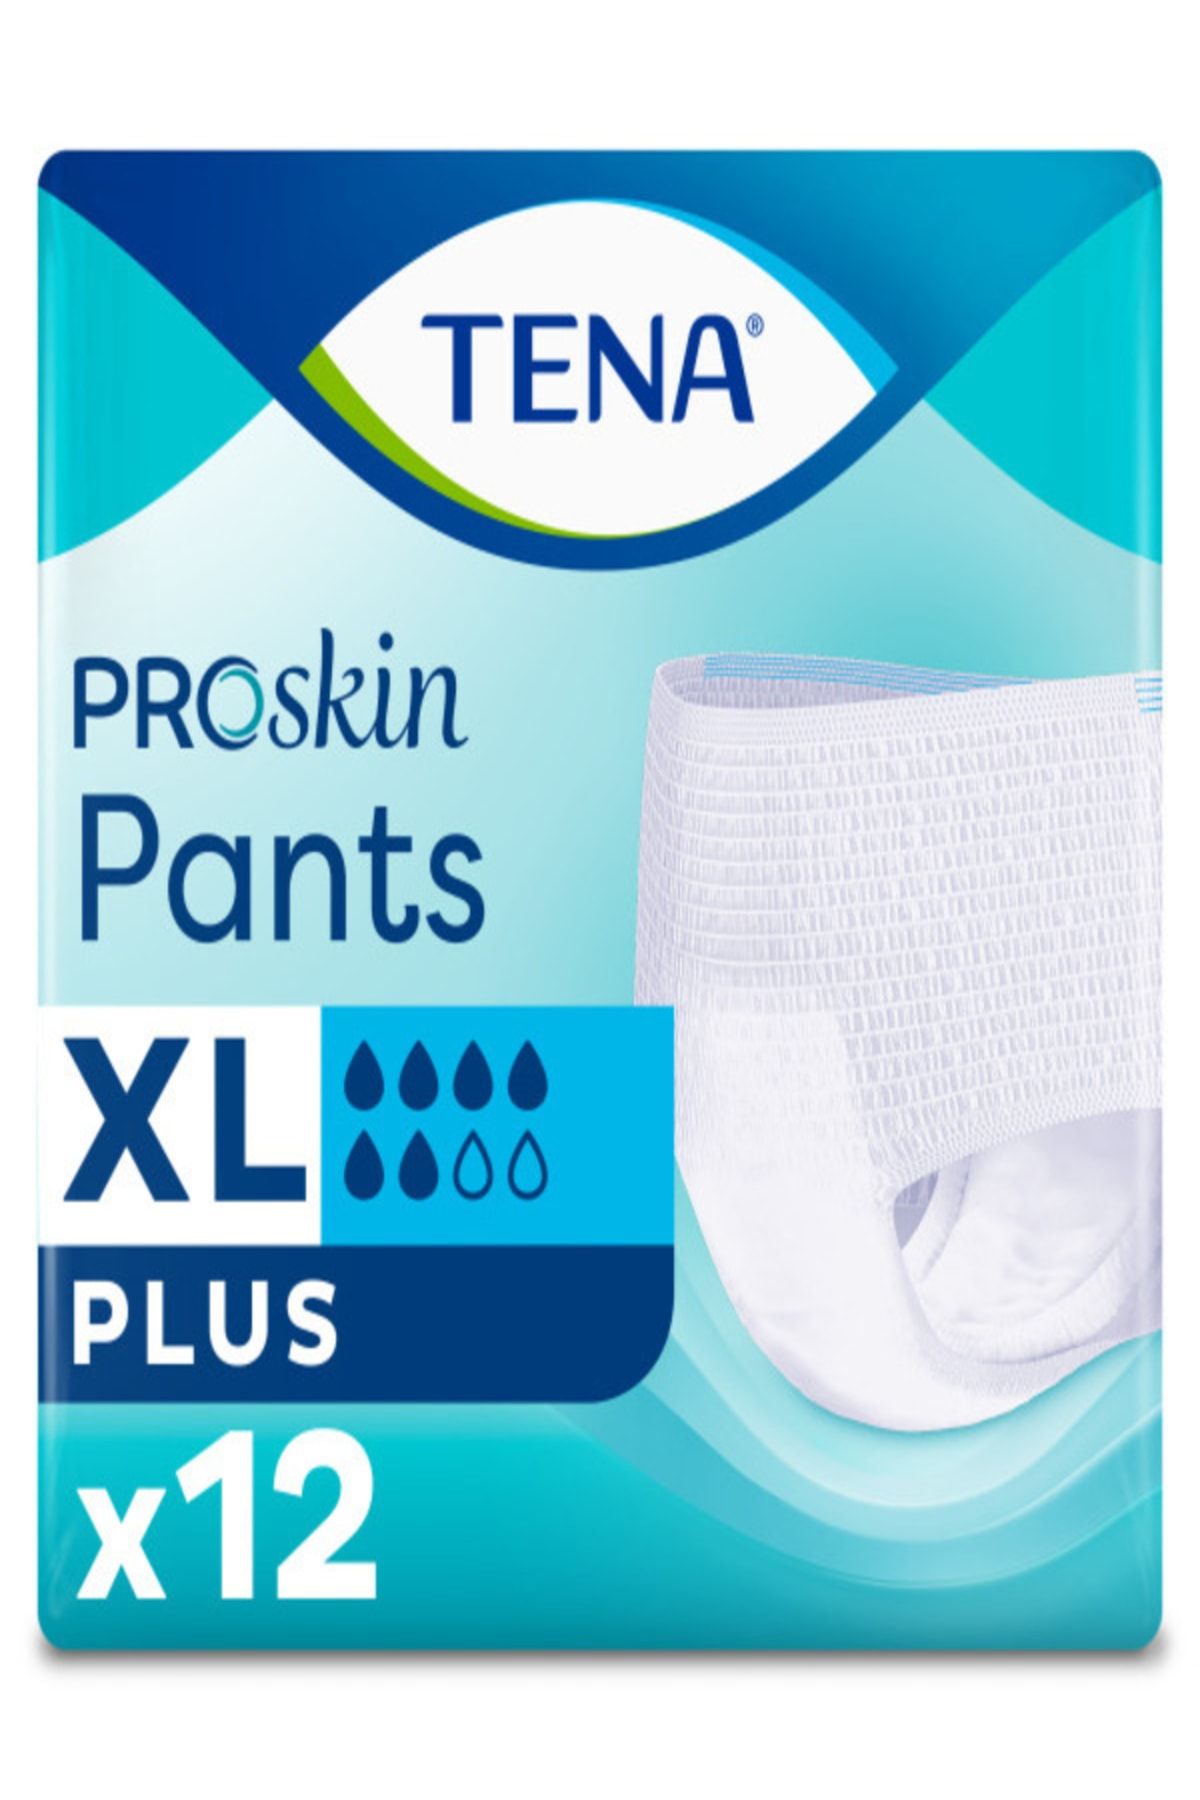 Tena Proskin Pants Plus Emici Külot, En Büyük Boy (xl), 6 Damla, 12'li7322541140421